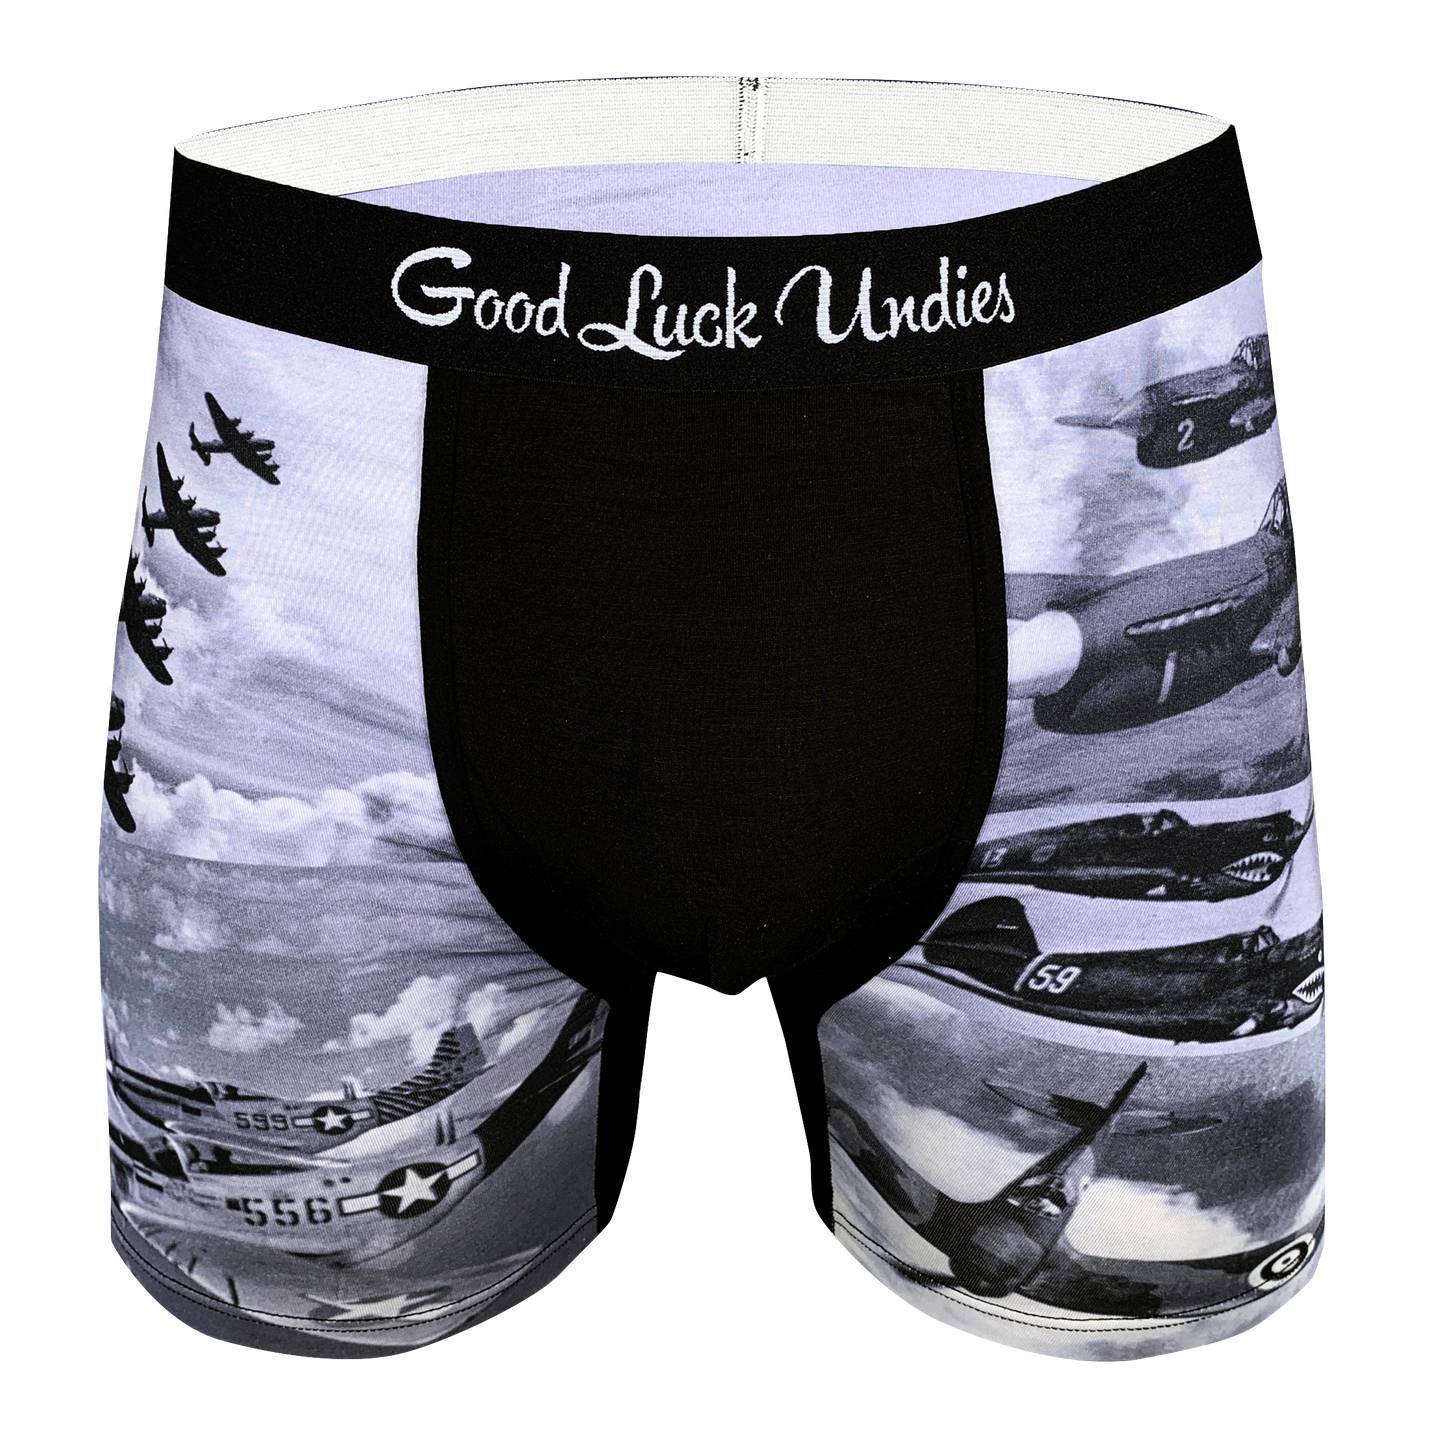 Greta Van Fleet Boxers Custom Photo Boxers Men's Underwear Plain